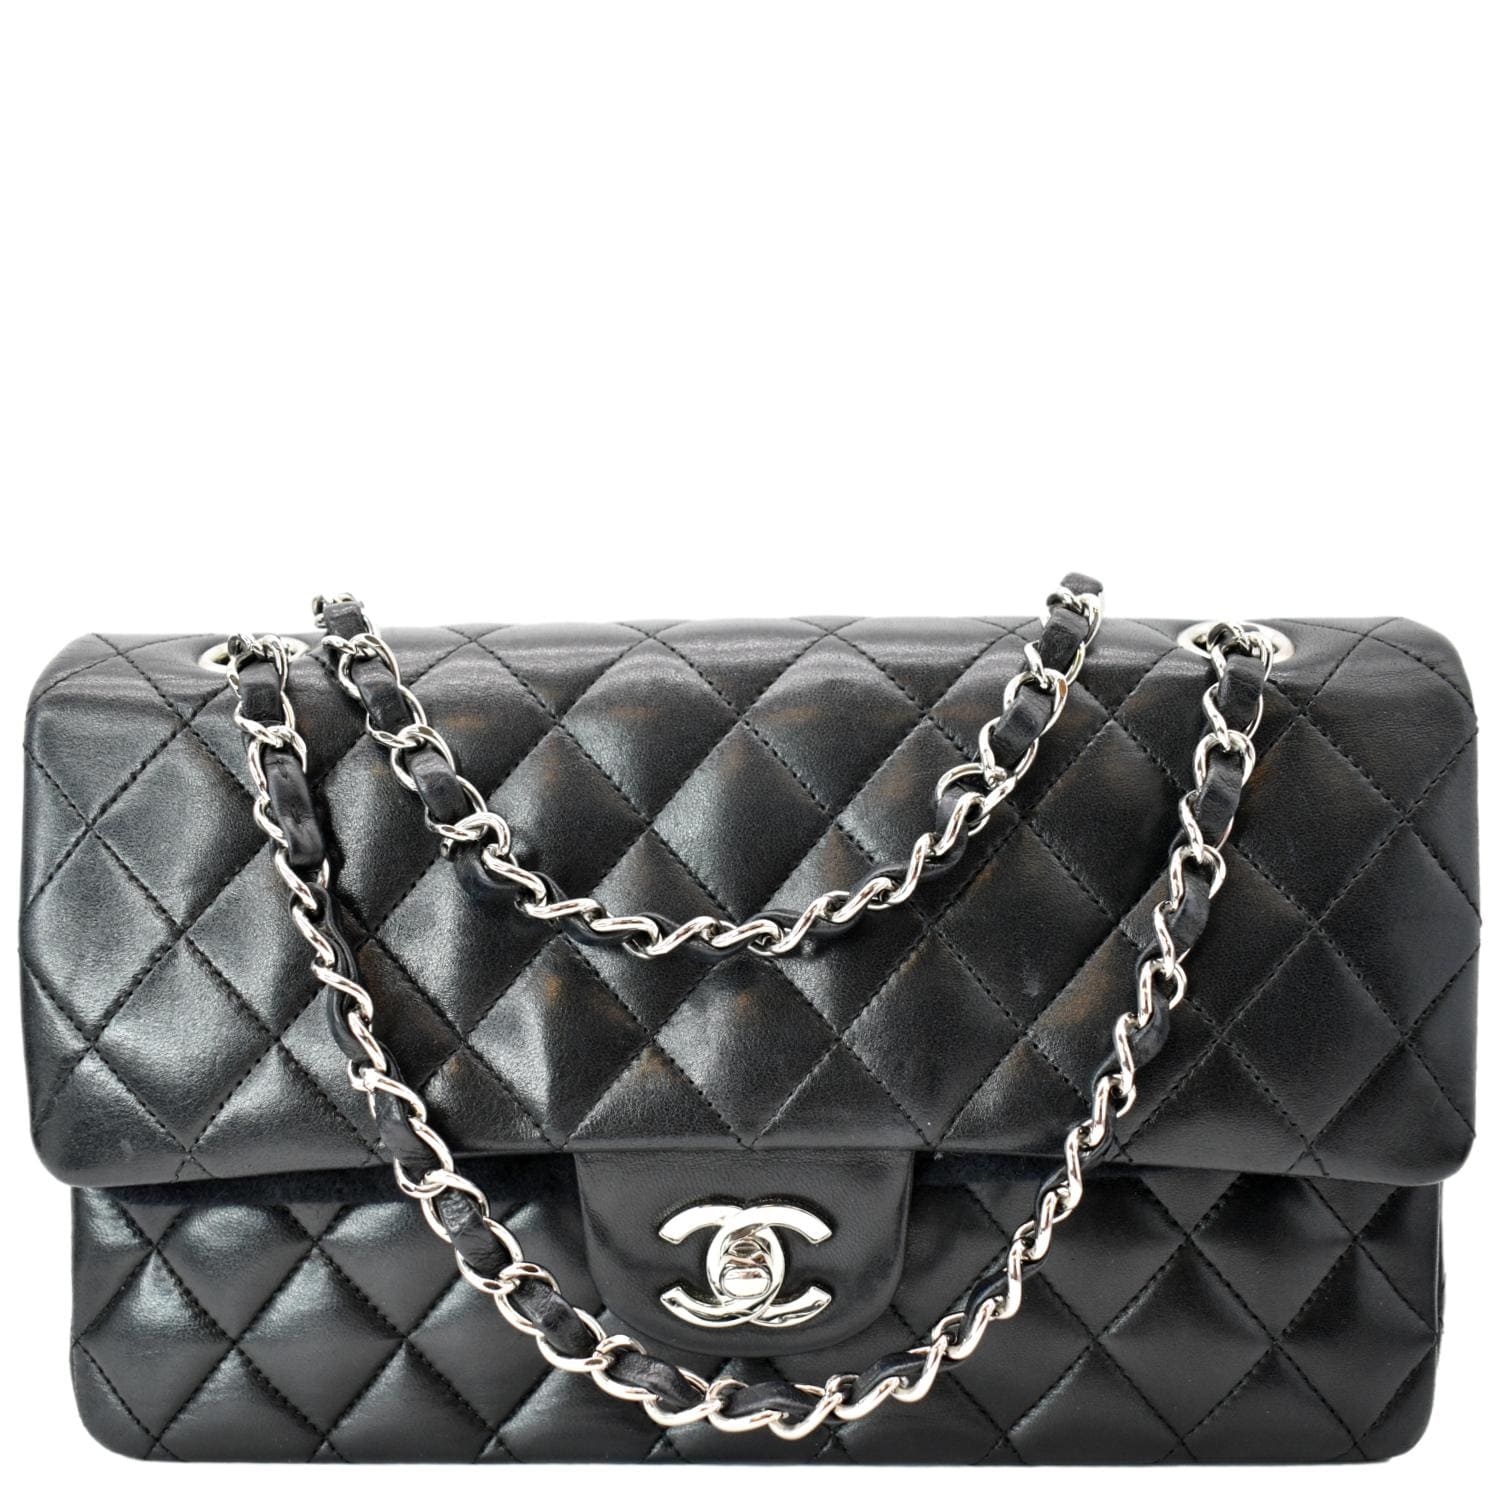 Chanel Medium Double Flap Lambskin Leather Shoulder Bag